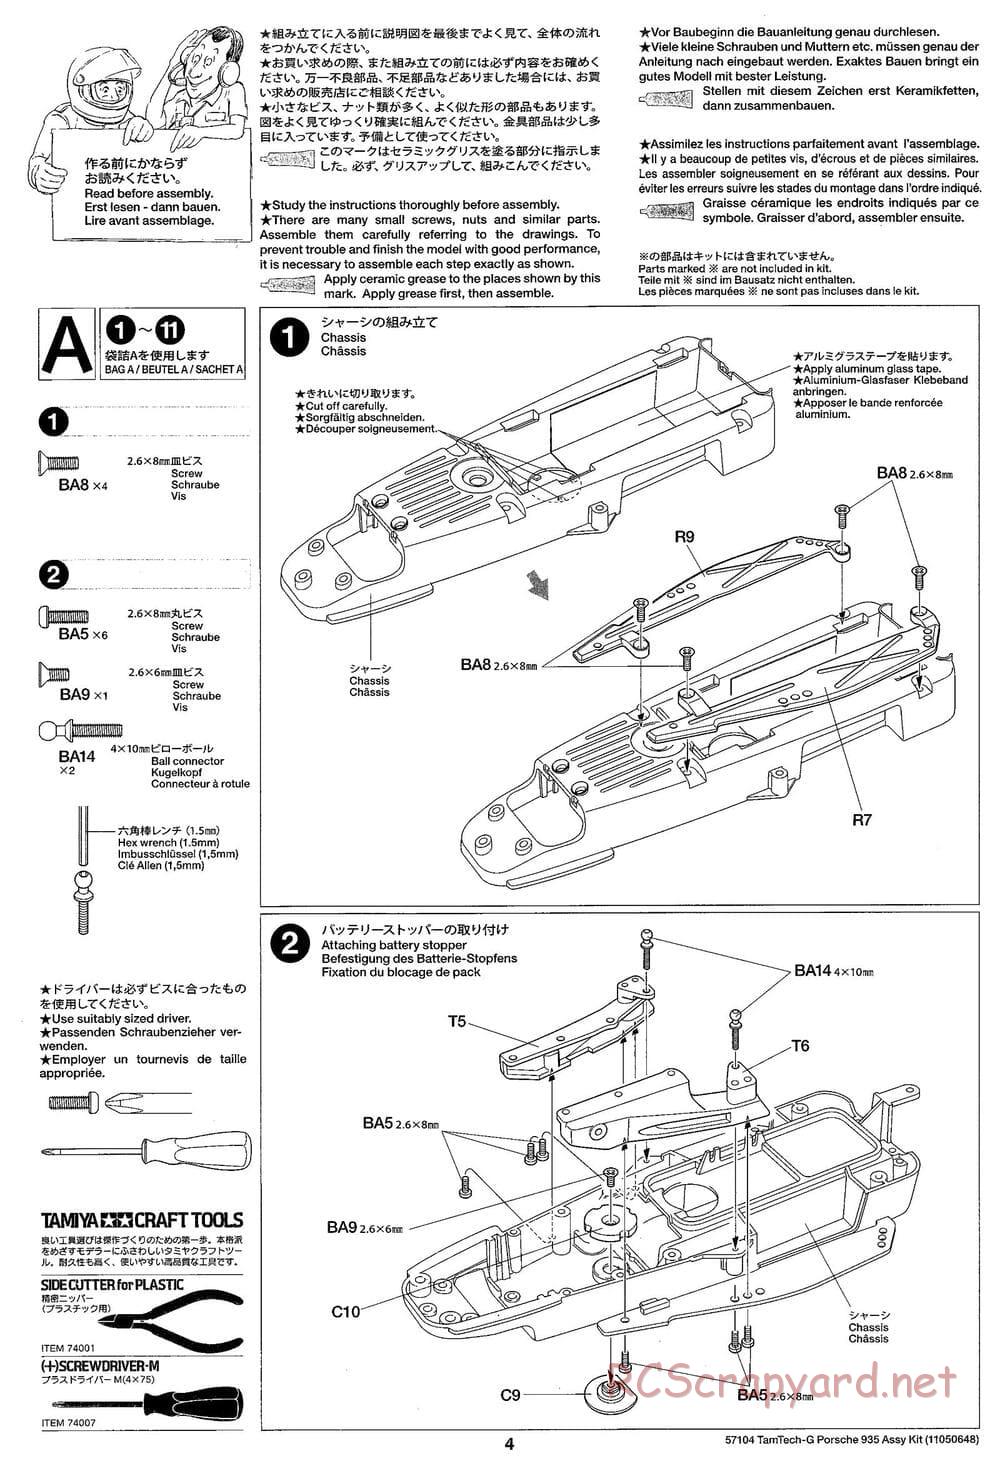 Tamiya - Porsche 935 Martini - GT-01 Chassis - Manual - Page 4